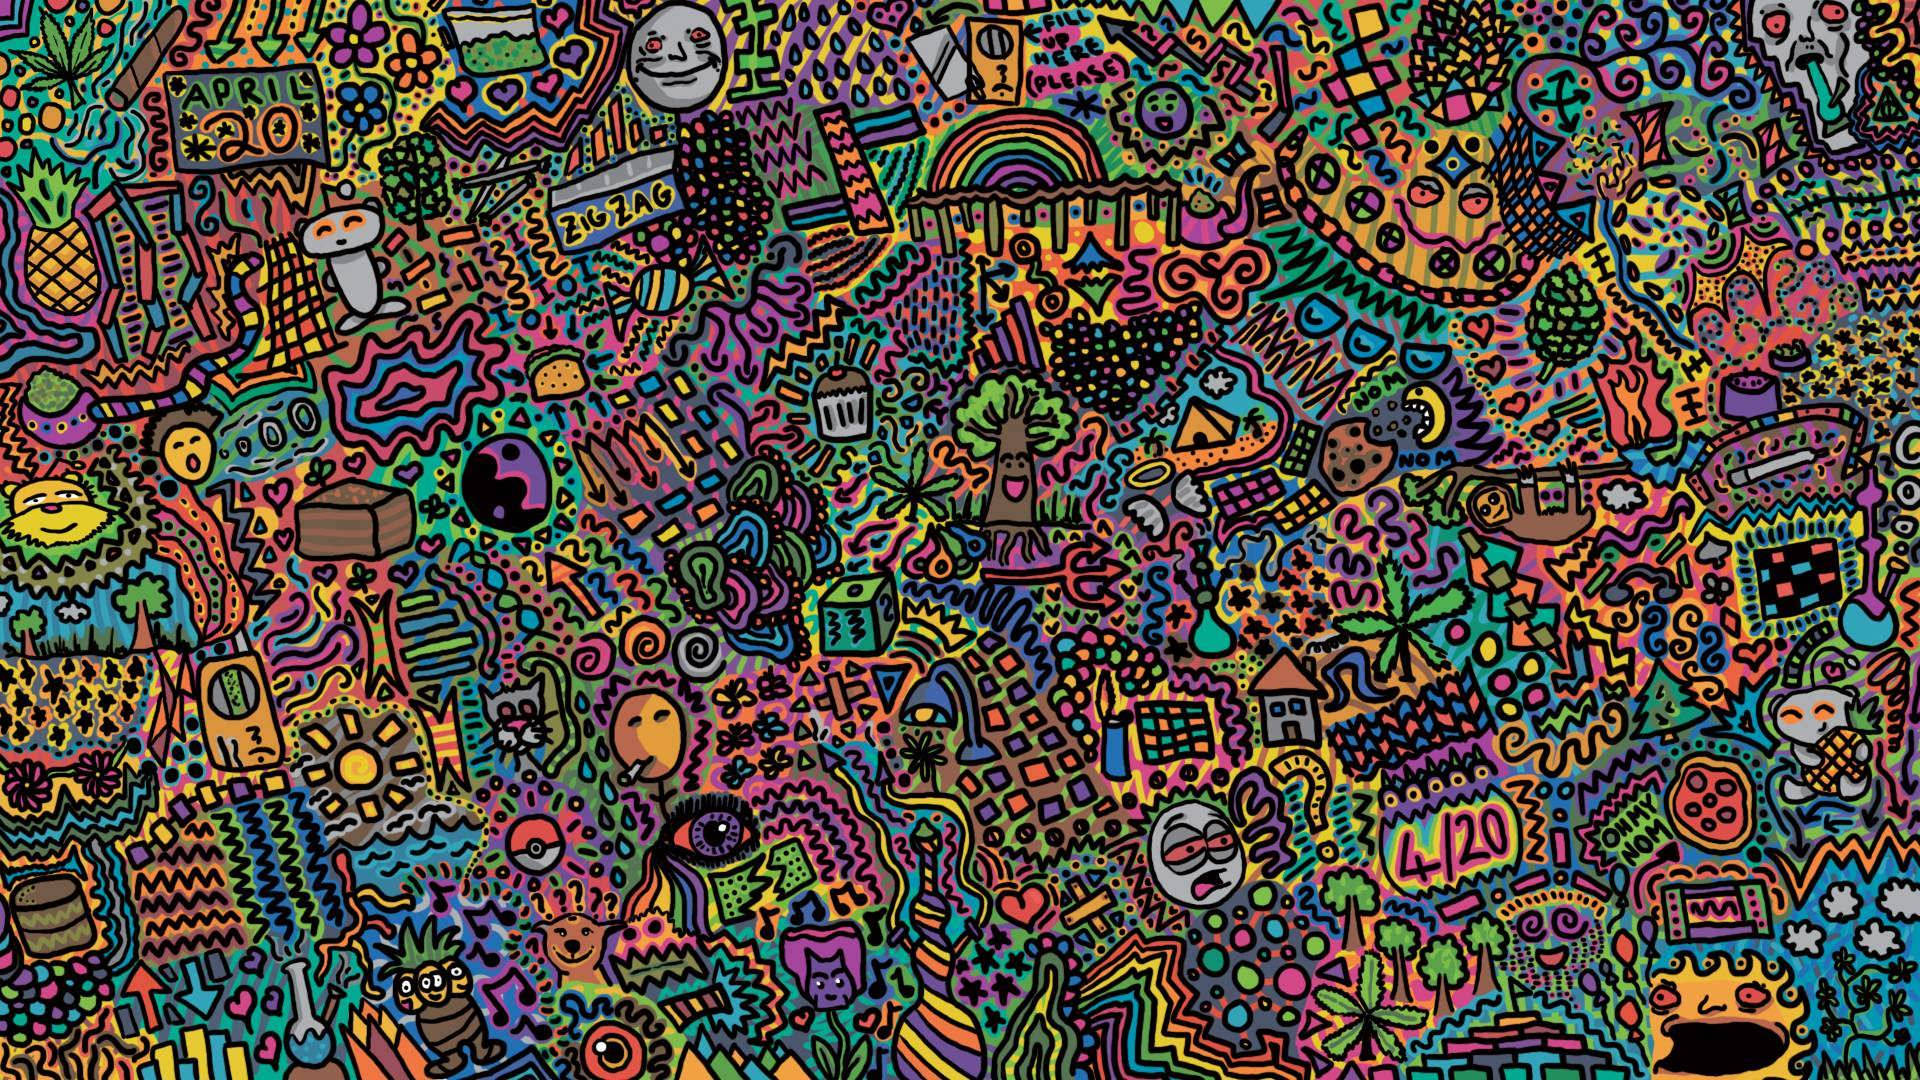 A complex psychedelic art full of colors wallpaper.